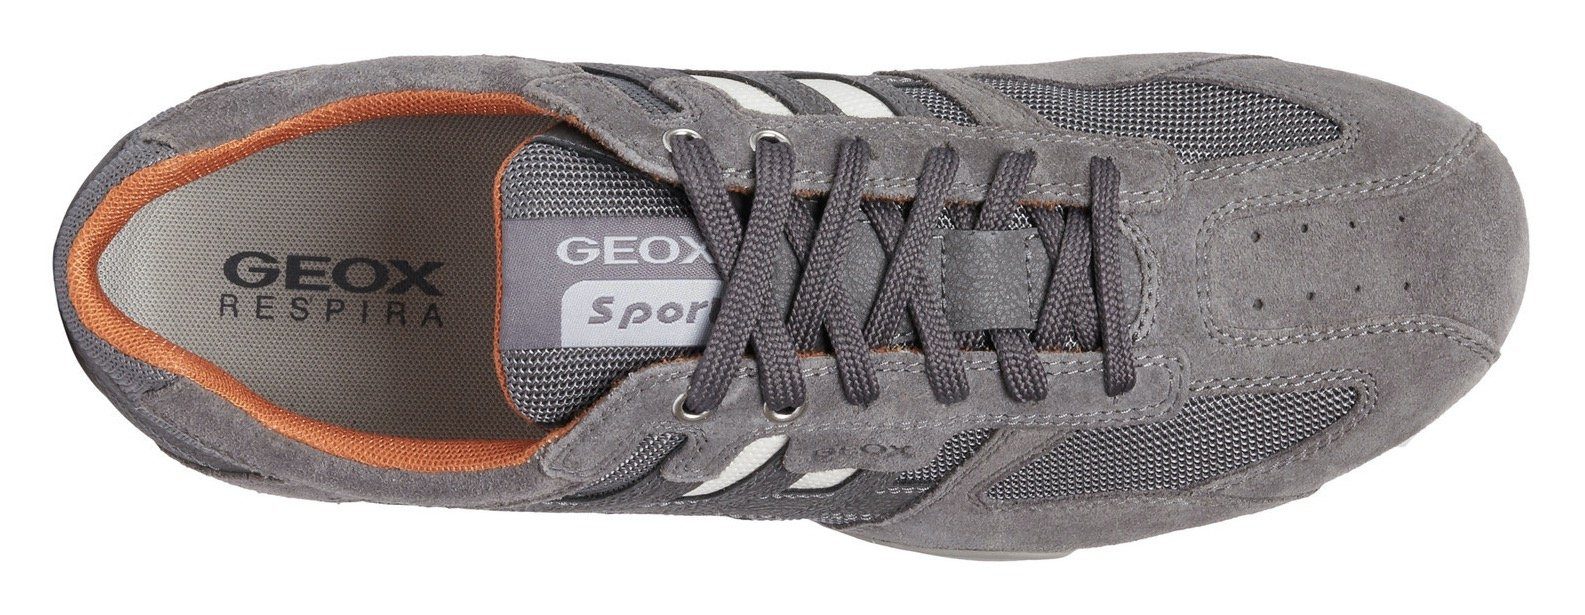 Geox Snake Sneaker im Materialmix Geox Spezial orange weiß, mit hellgrau, Membrane